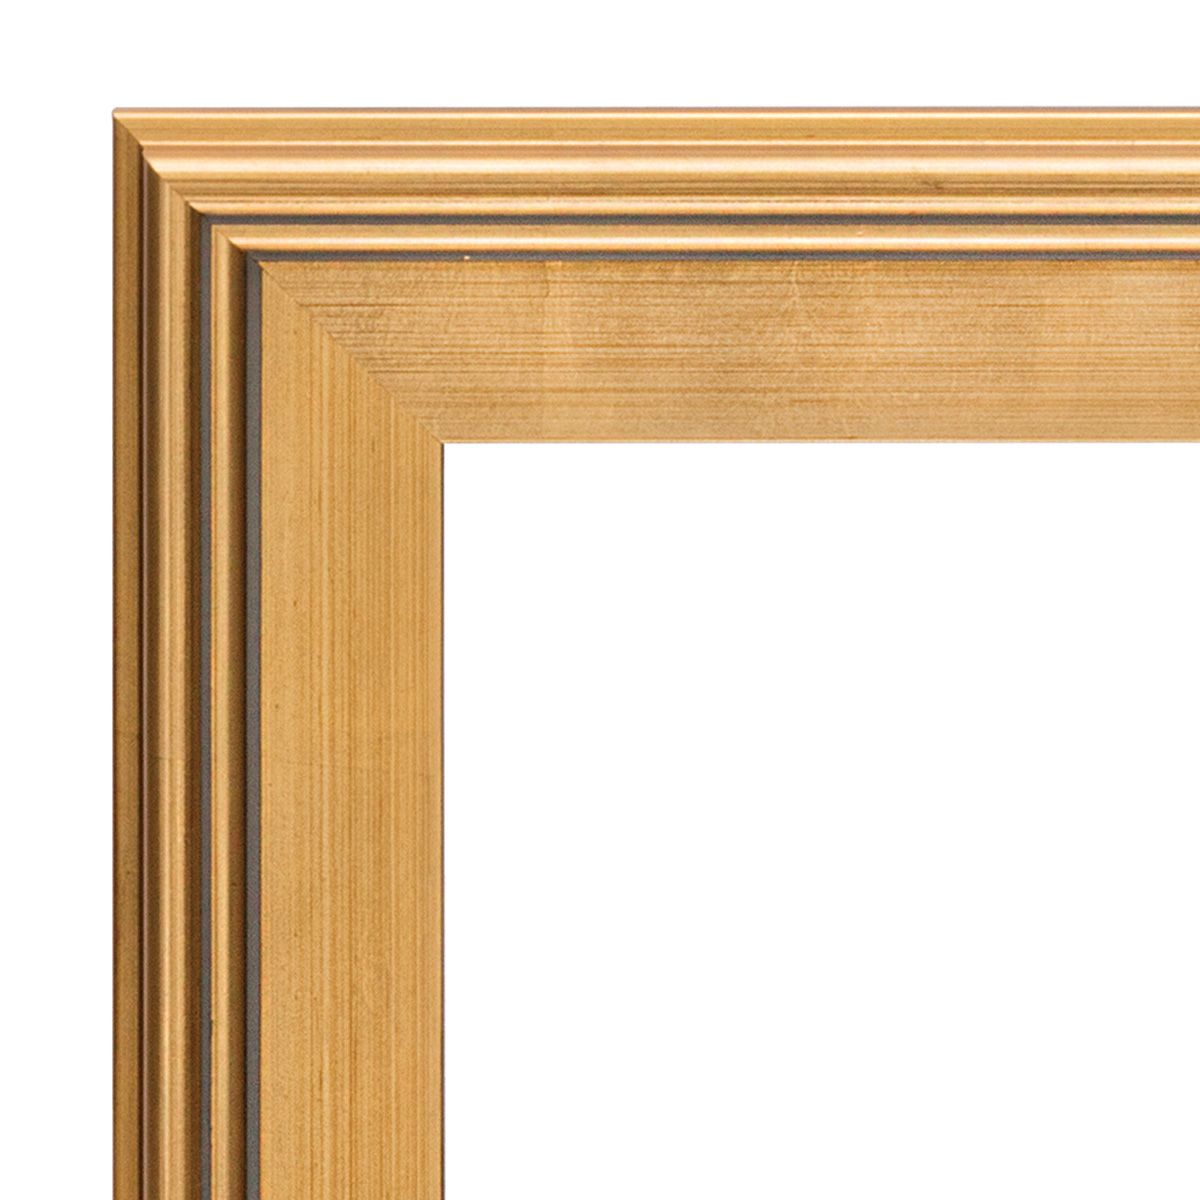 Classic Style Plein Air Antique Gold Leaf Wood Frame 8x10 inches 